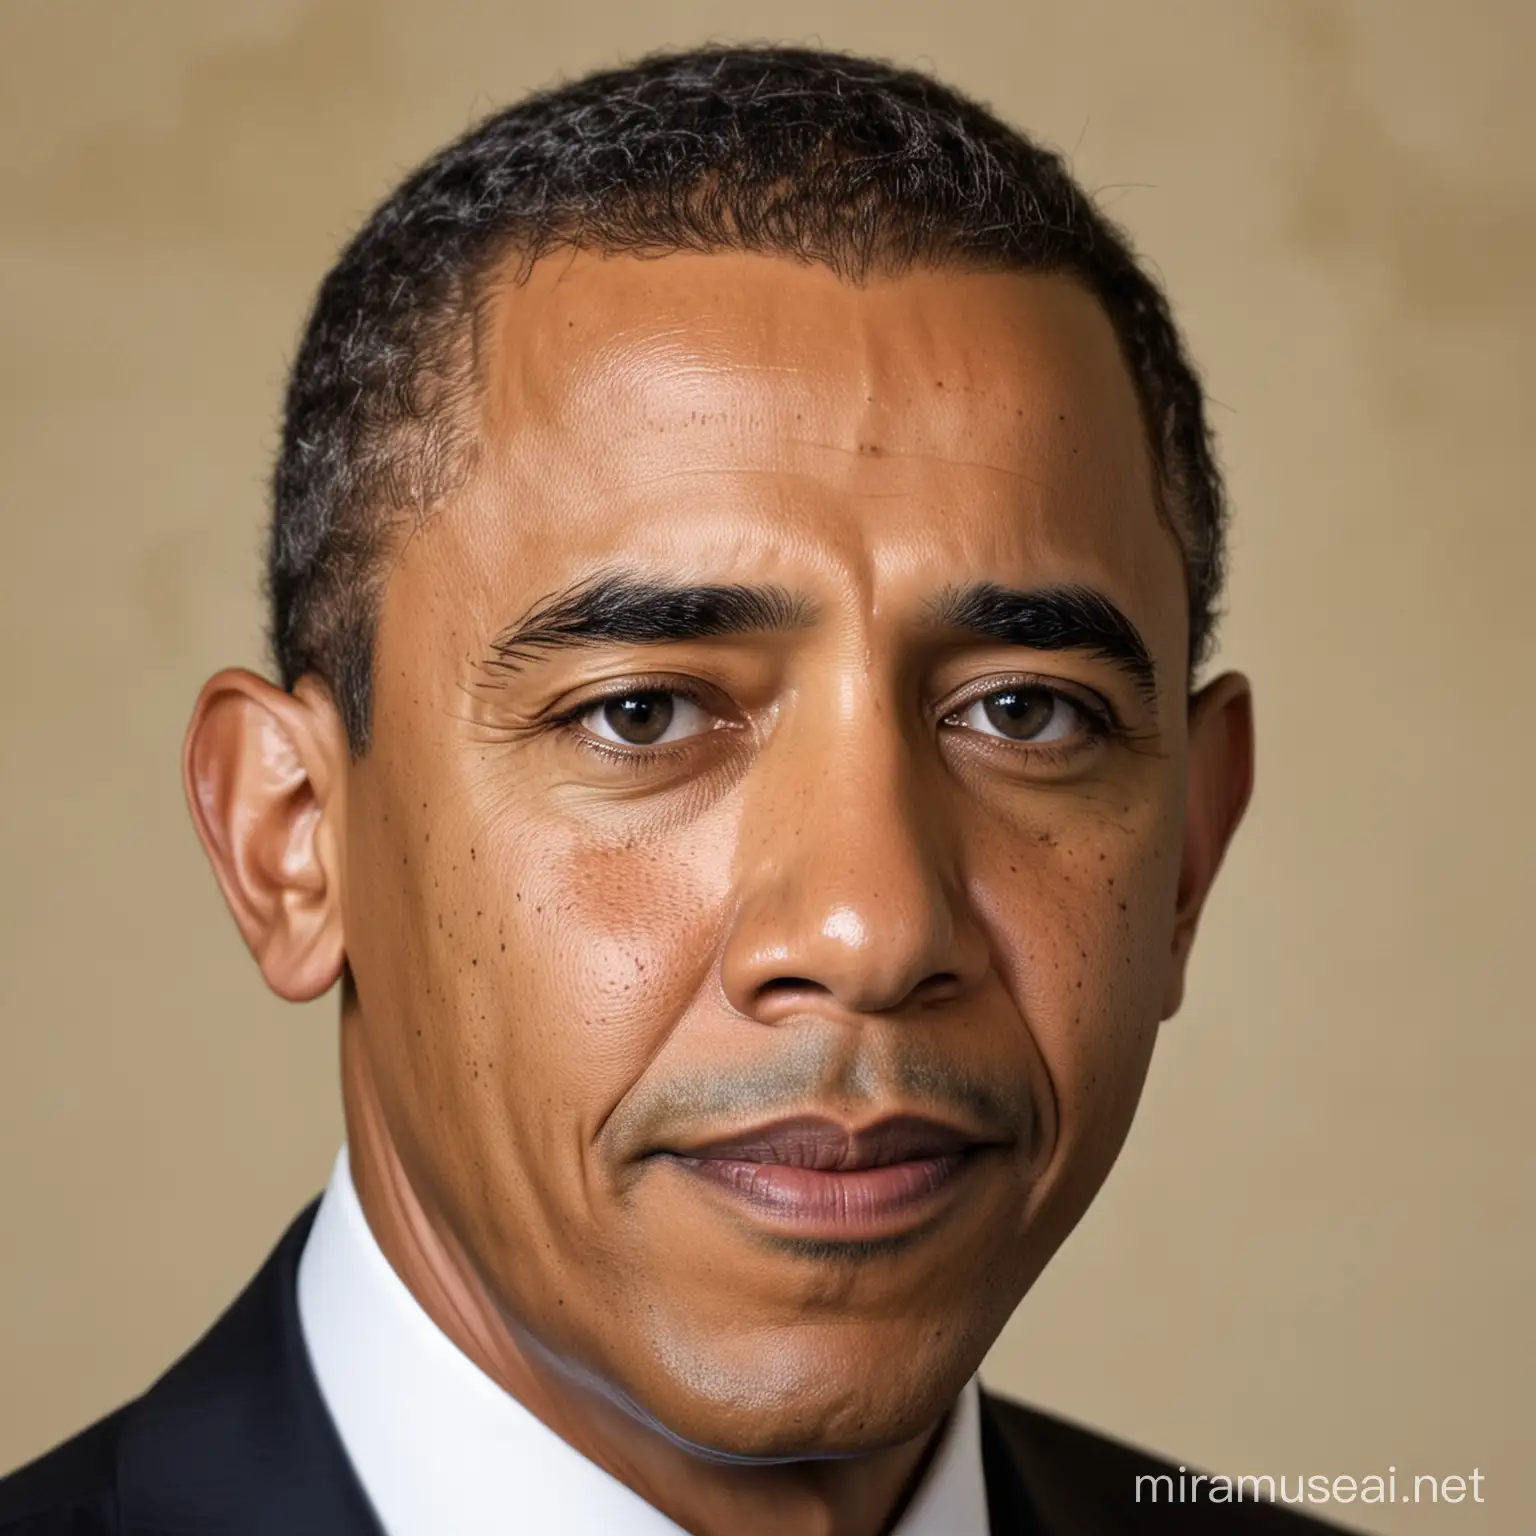 Barack Obama Portrait Inspirational Leader and Iconic Statesman